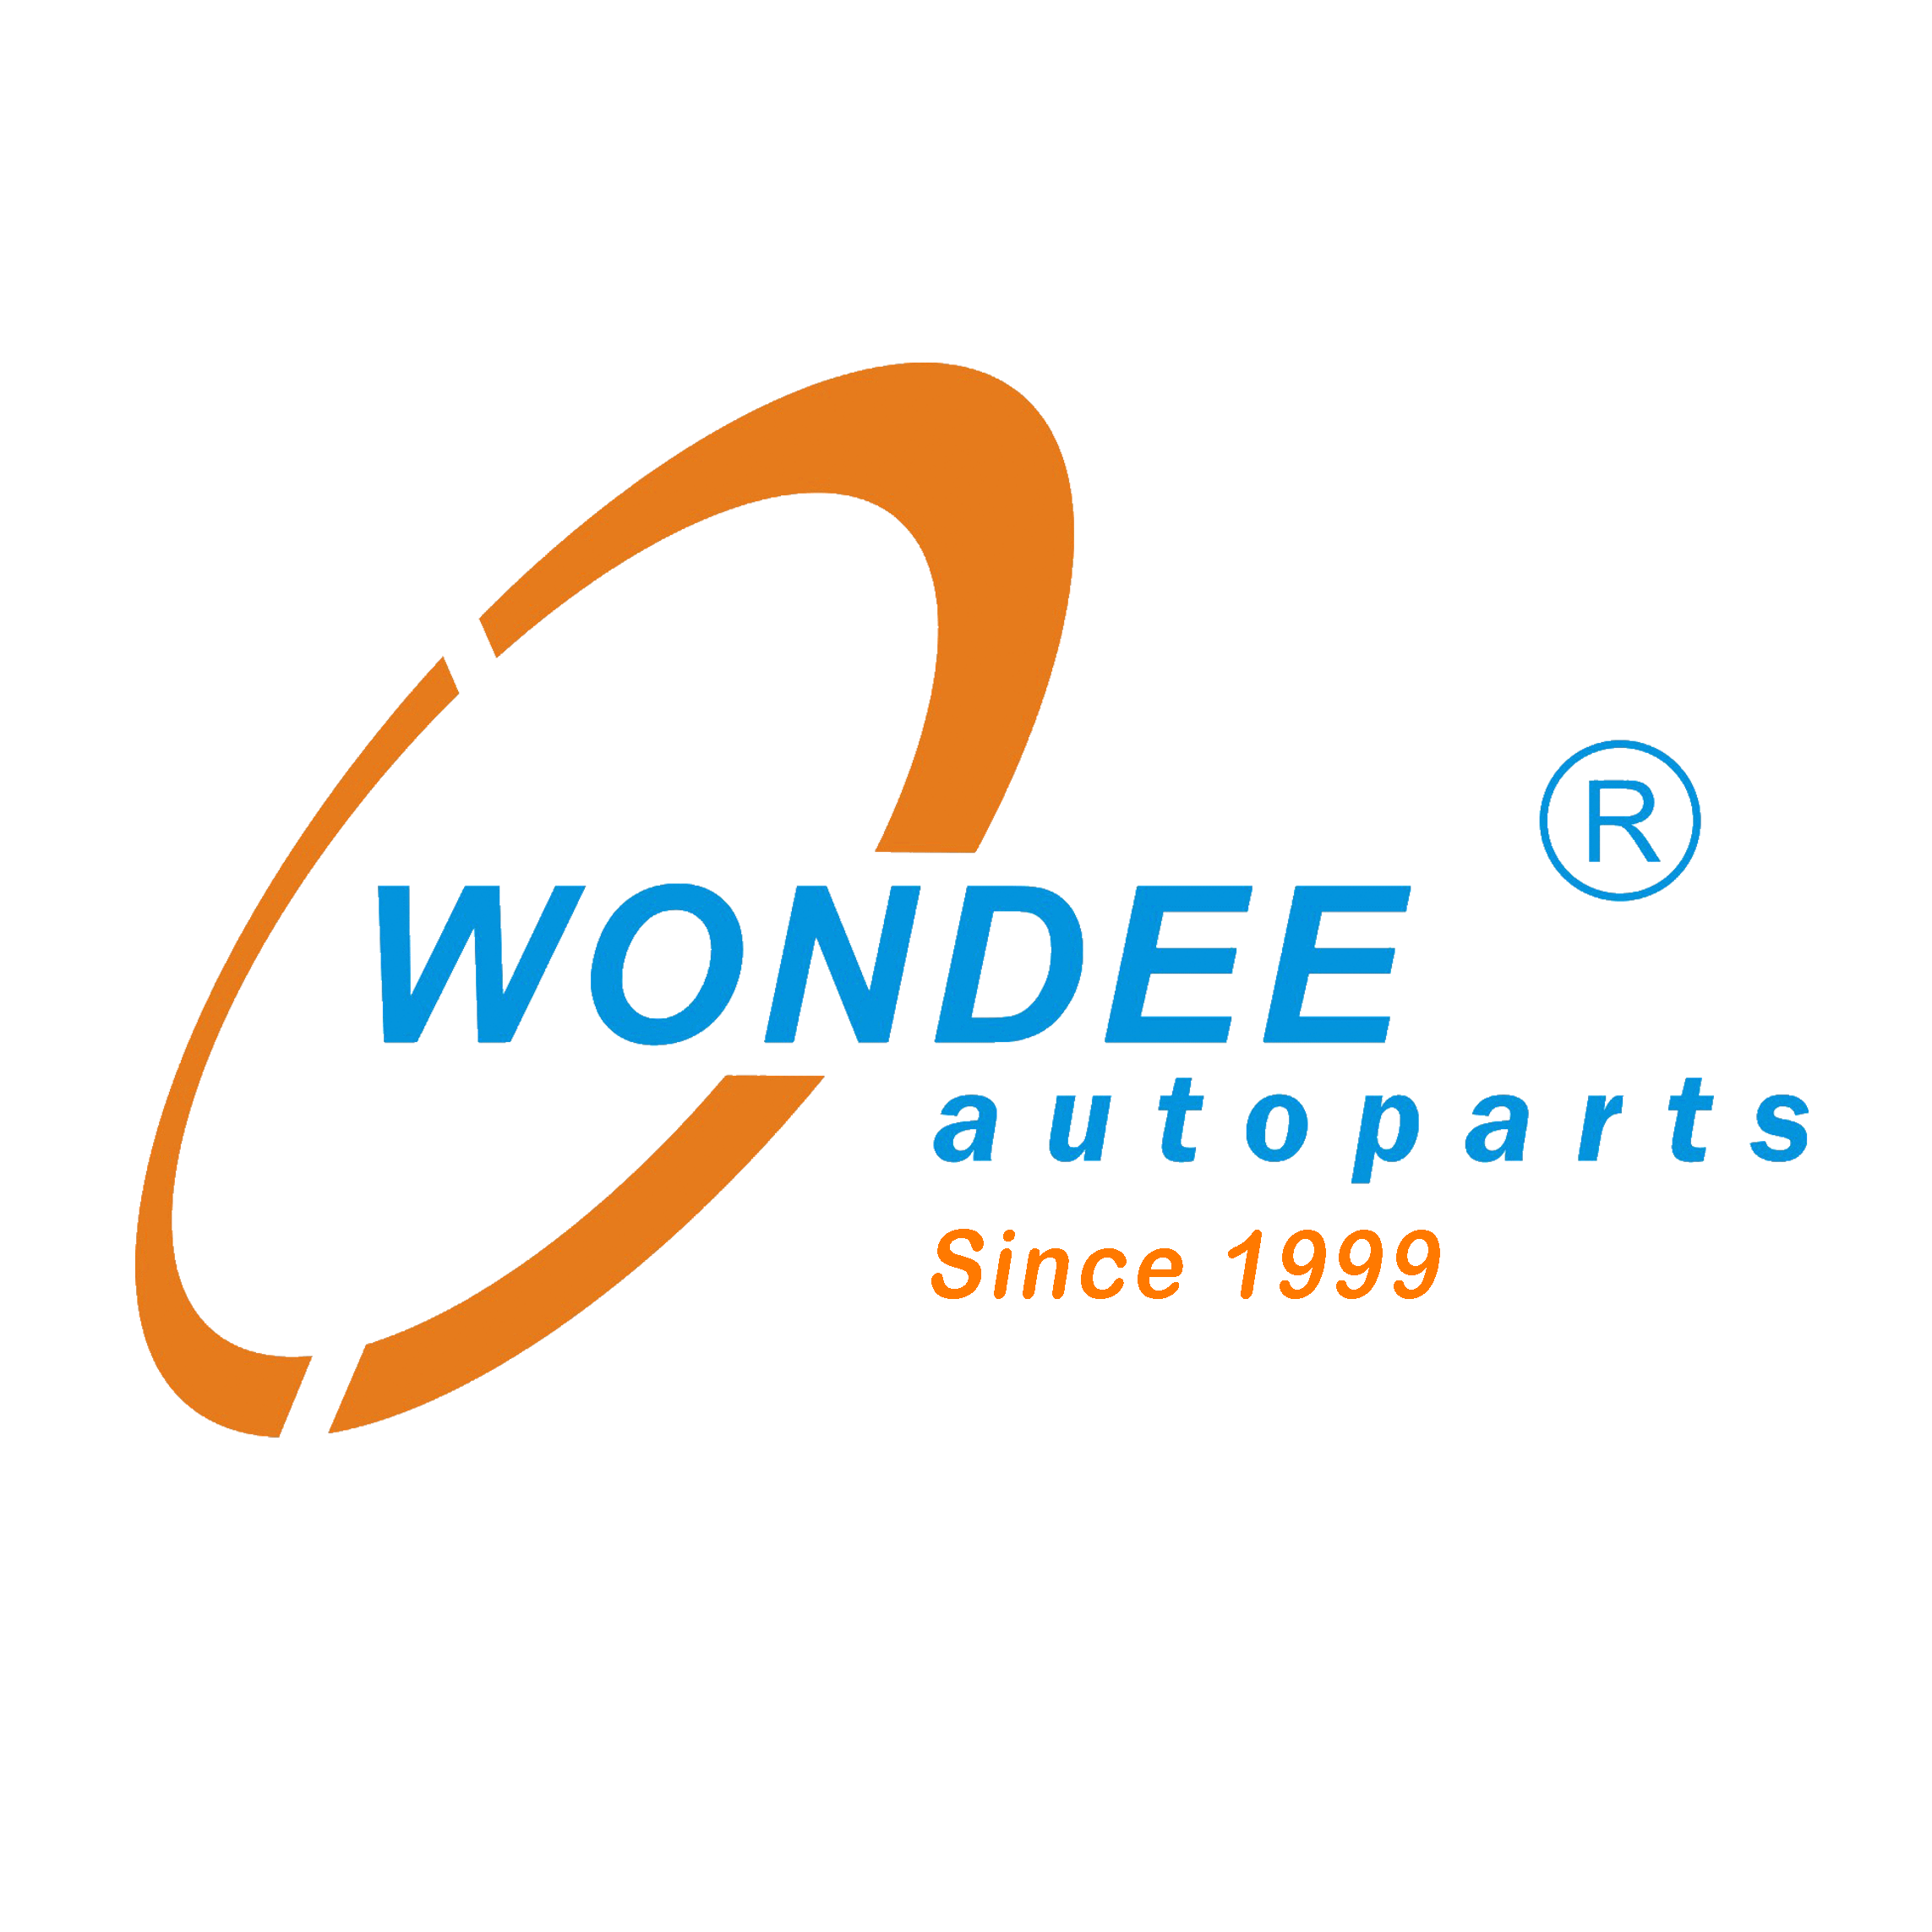 Xiamen Wondee Autoparts Co., Ltd.